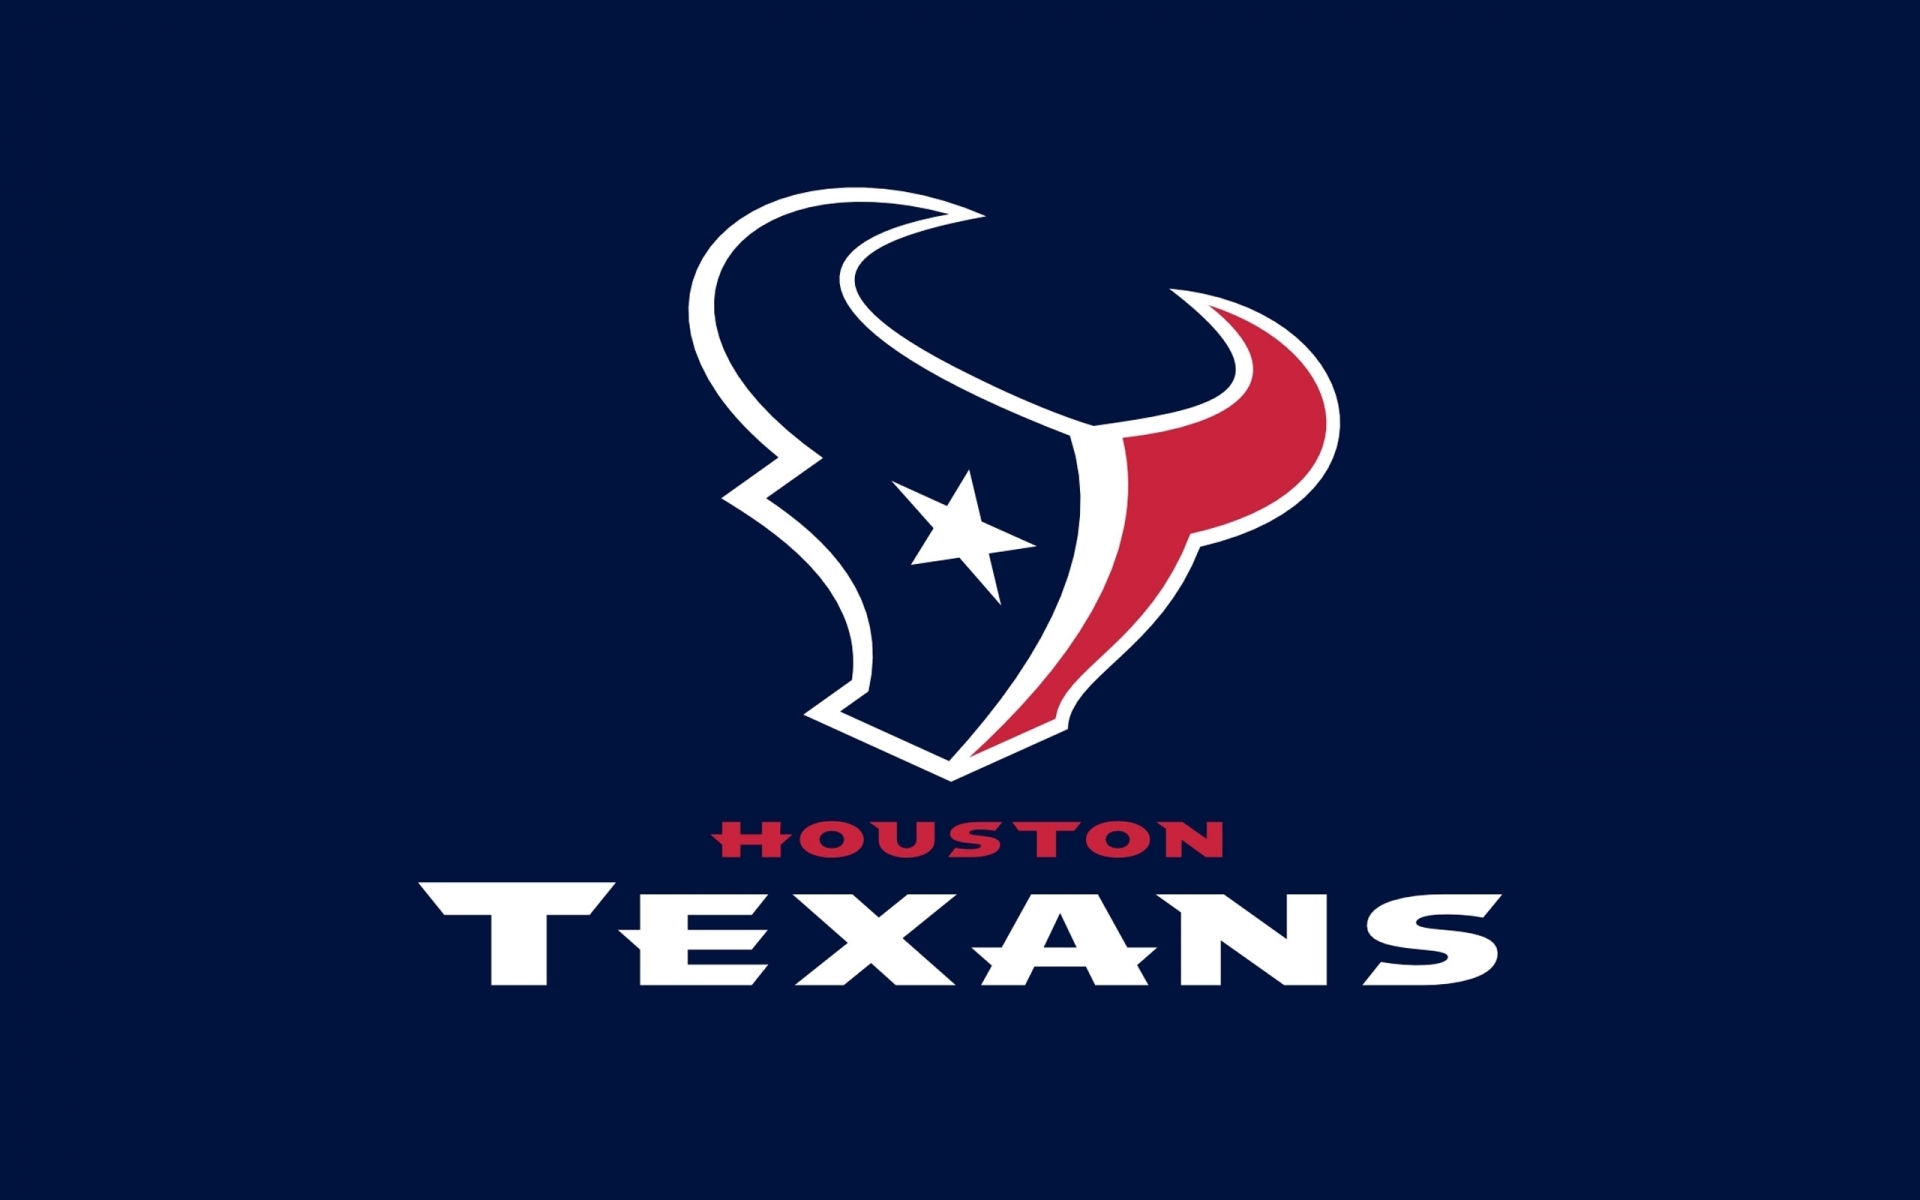 Houston Texans Logo for 1920 x 1200 widescreen resolution